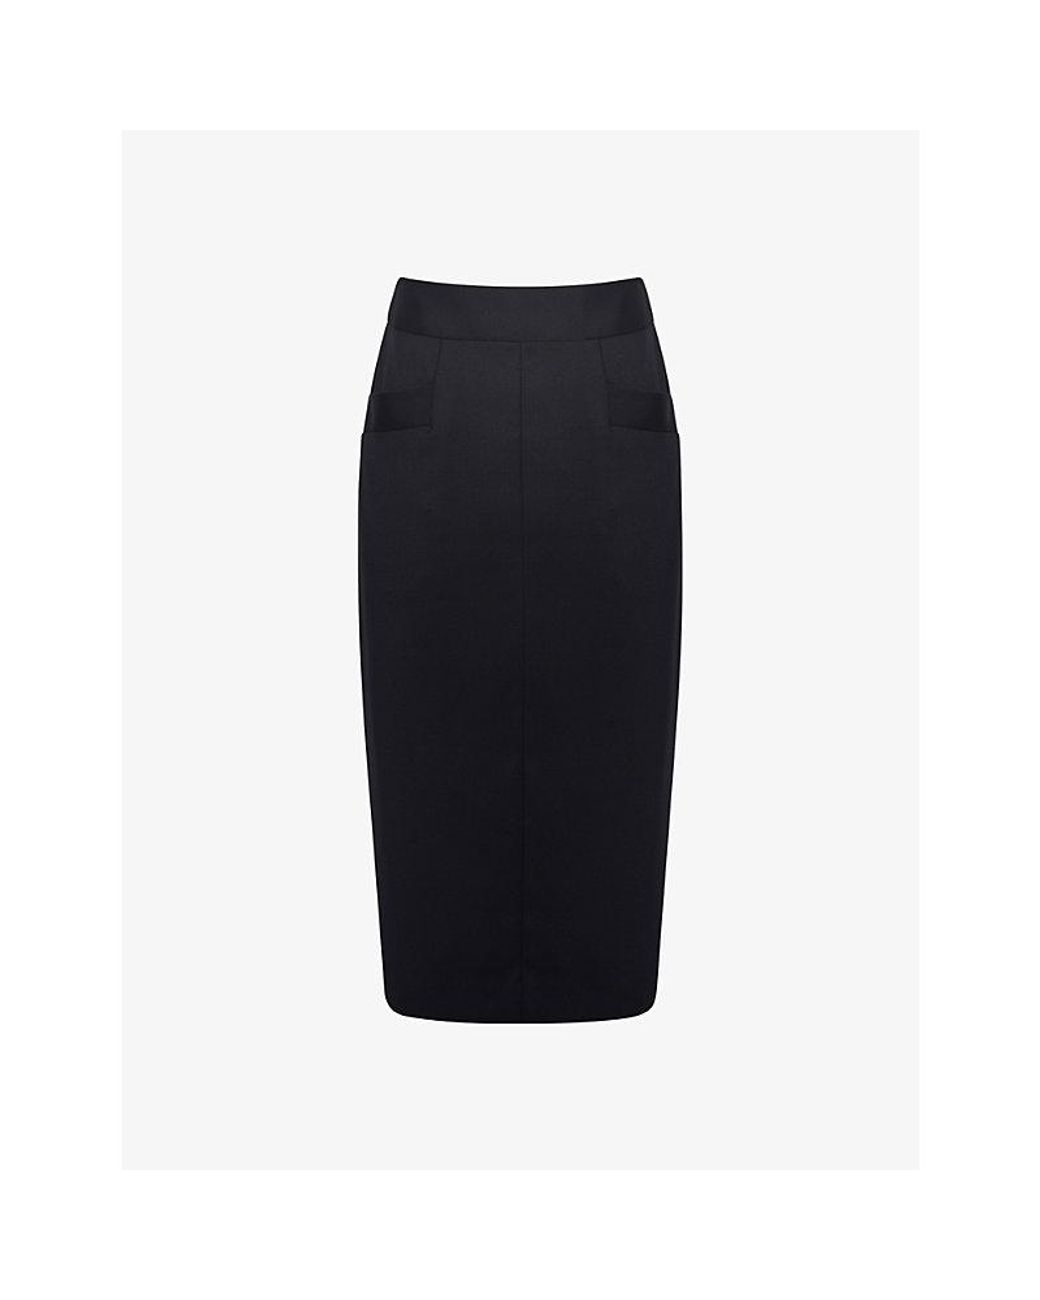 Calvin Klein | Skirts | Calvin Klein Black Tailored Upscale Pencil Skirt |  Poshmark